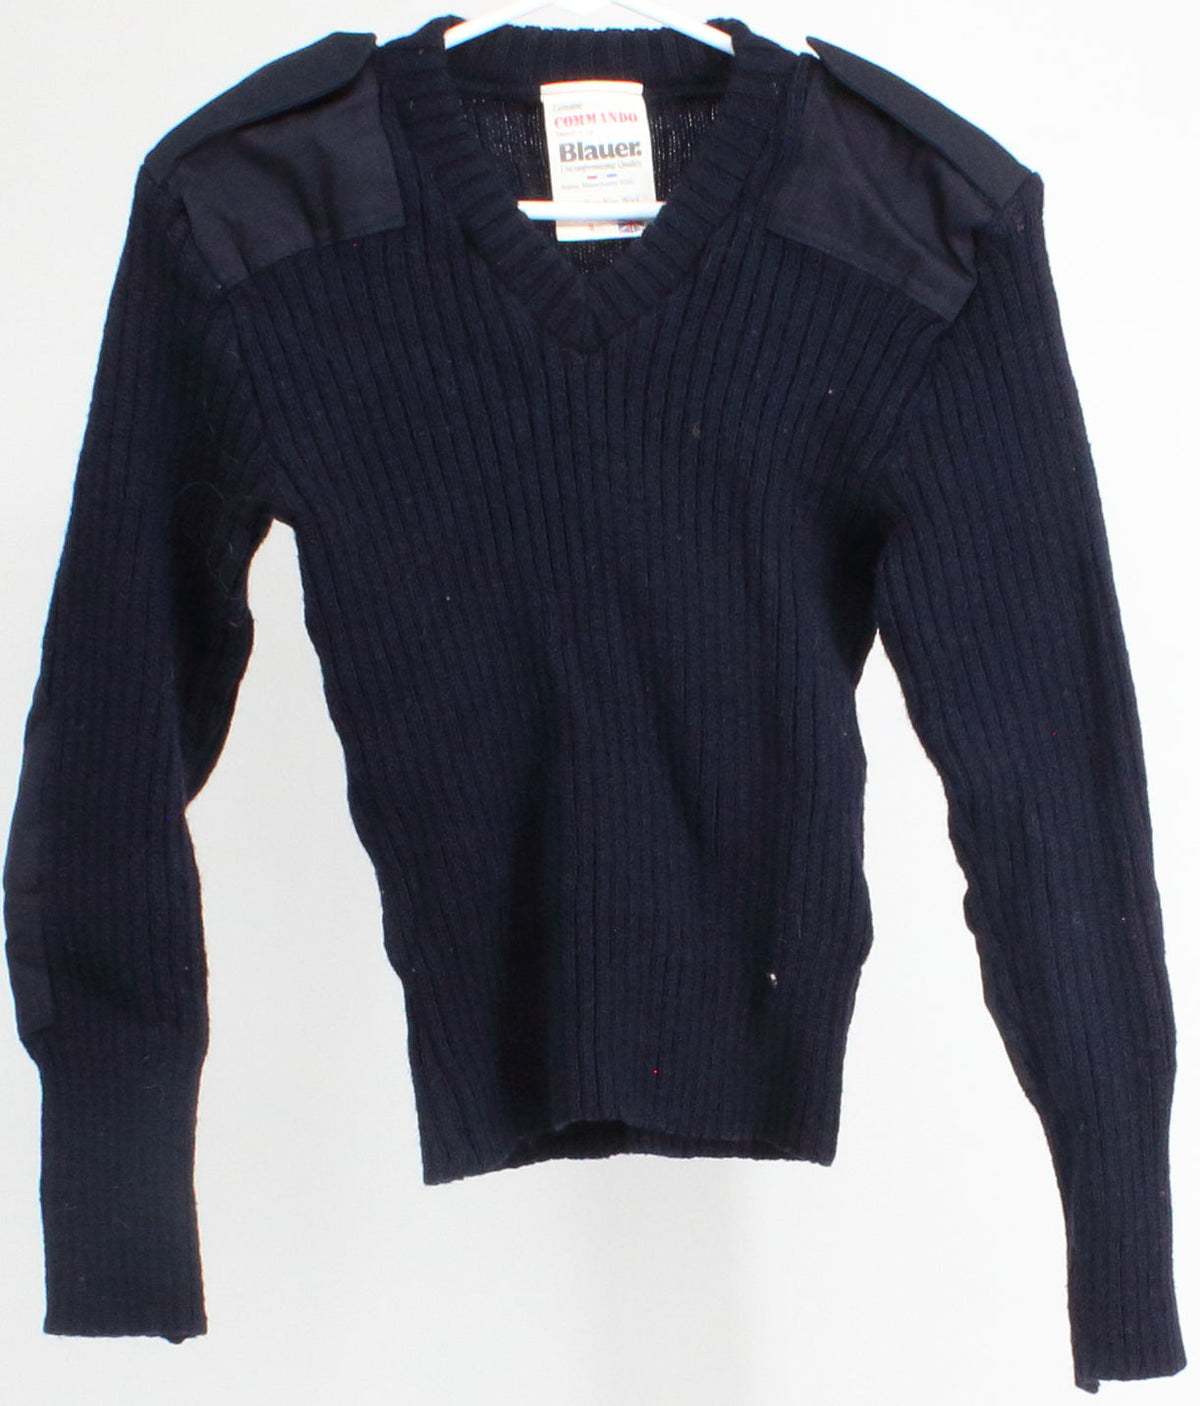 Genuine Commando Navy Blue Wool Sweater by Blauer